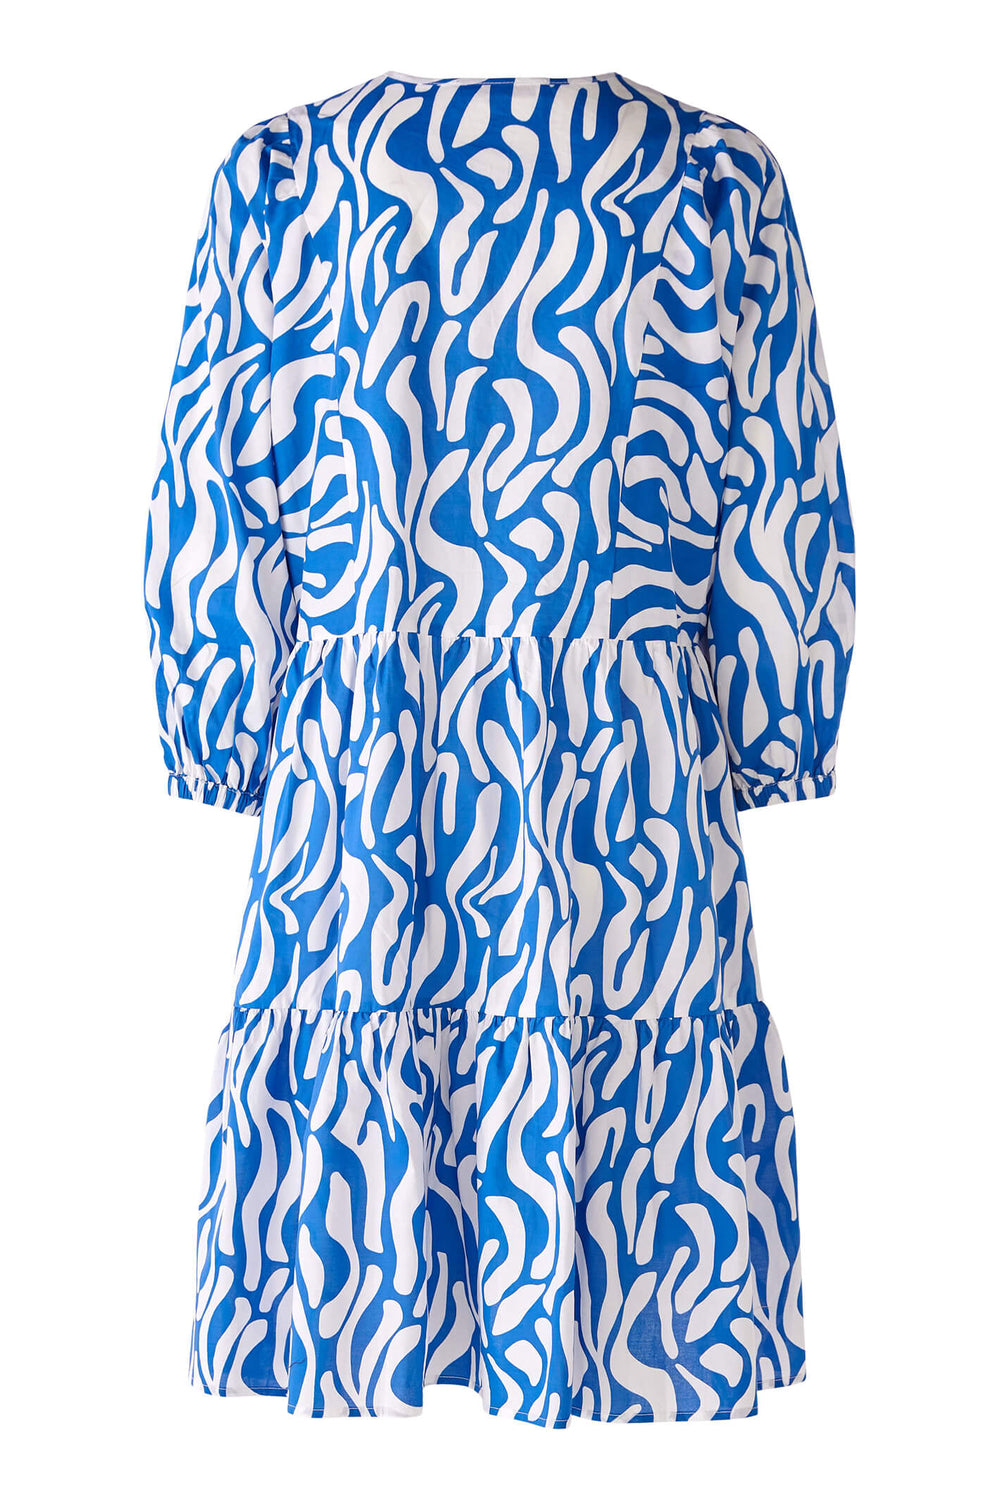 Oui 78550 Blue White Print Dress - Olivia Grace Fashion